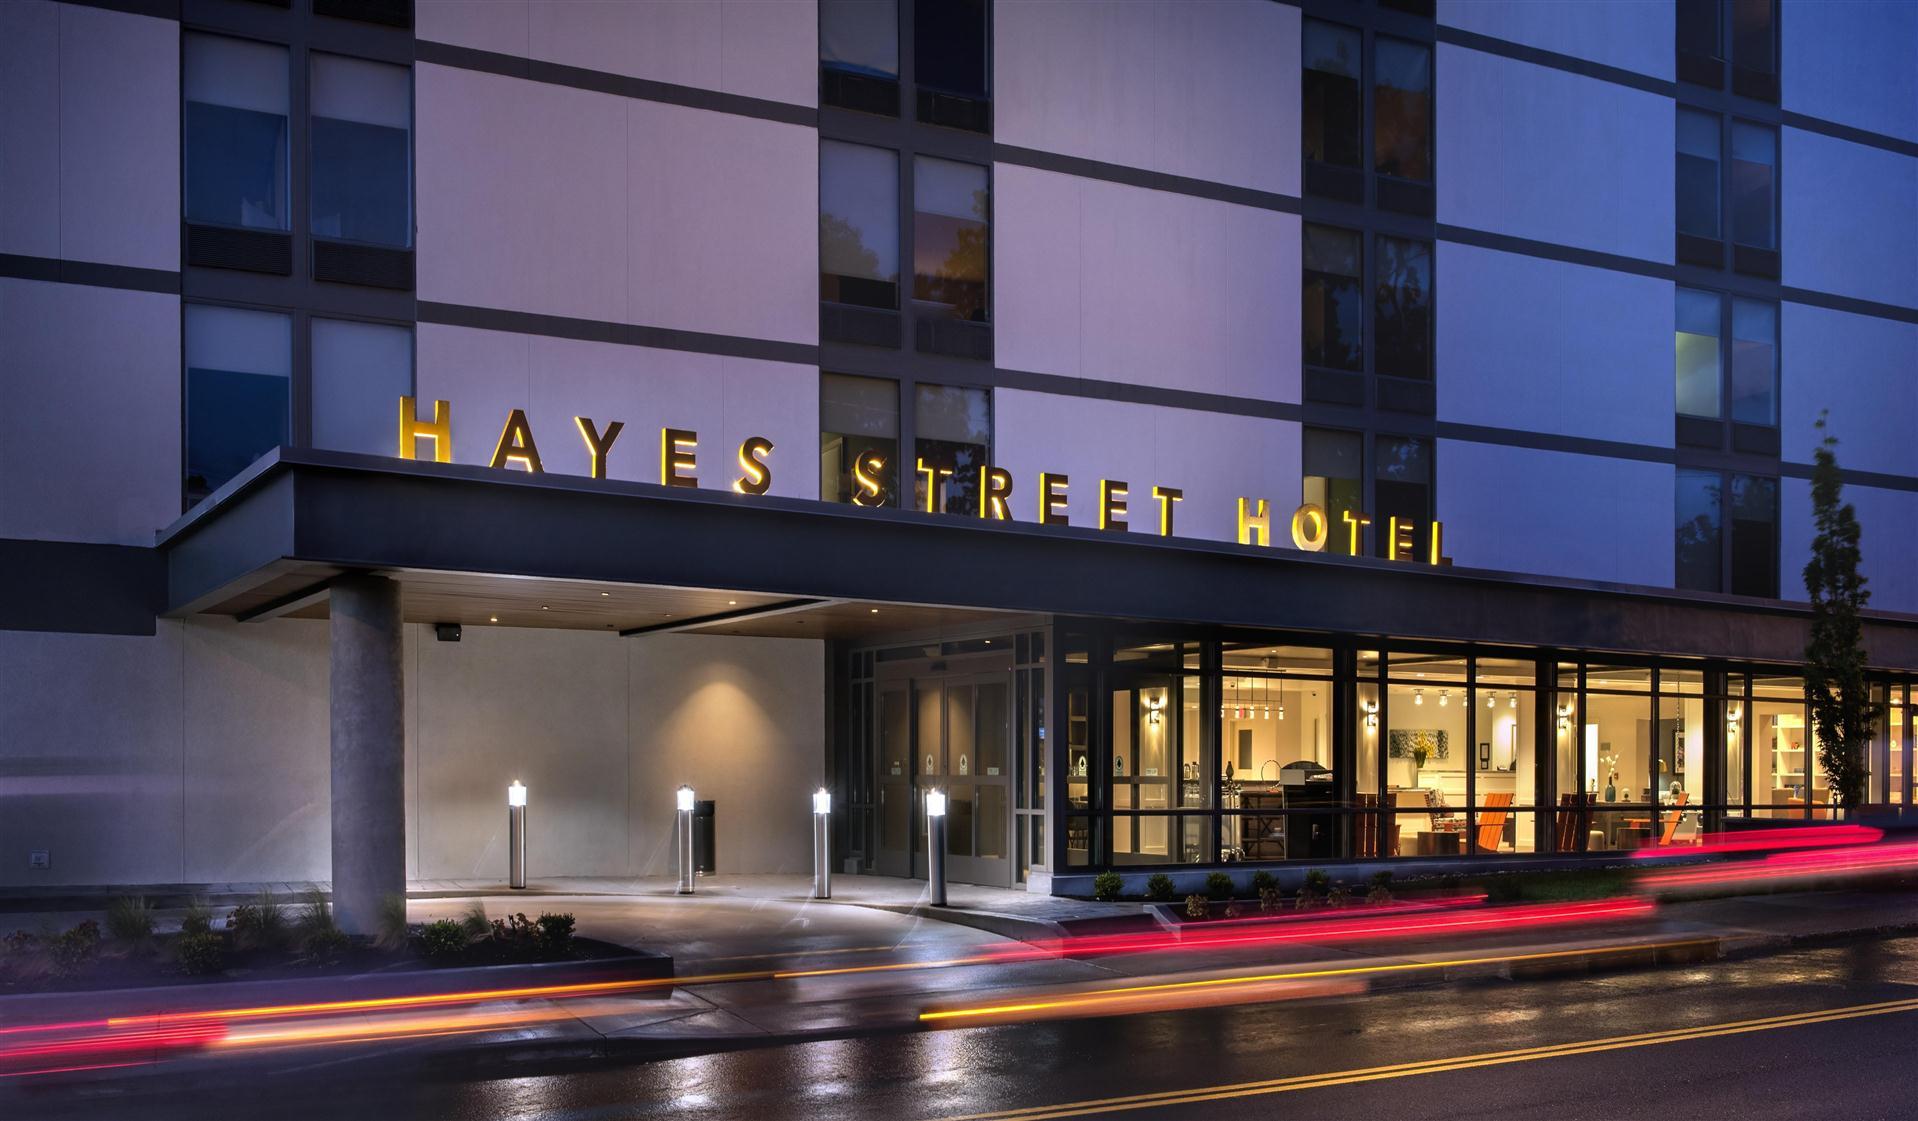 Hayes Street Hotel in Nashville, TN